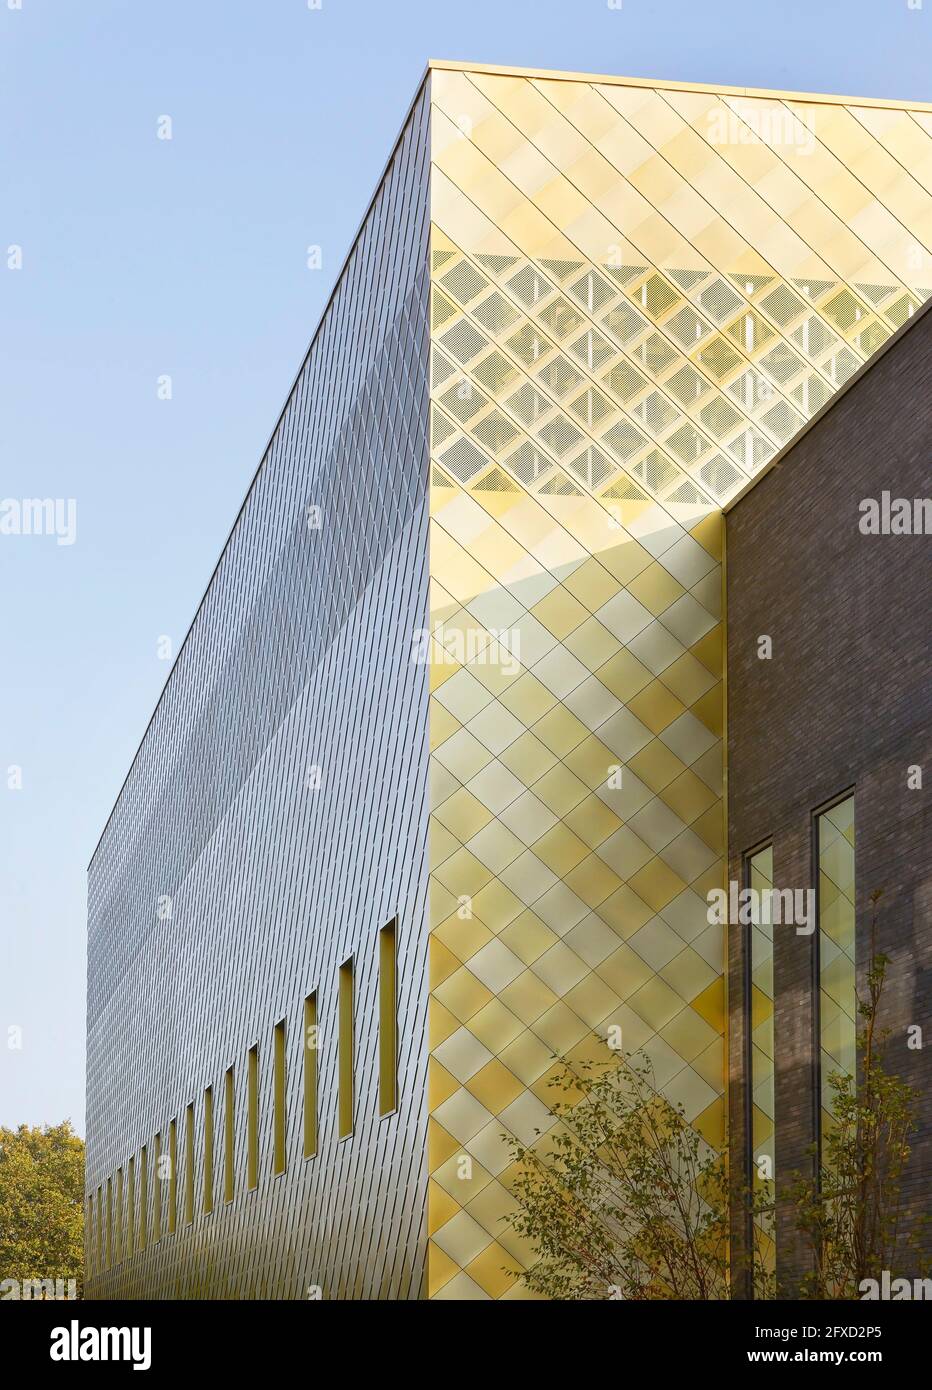 Detalle de fachada. University of Birmingham, Collaborative Teaching Laboratory, Birmingham, Reino Unido. Arquitecto: Sheppard Robson, 2018. Foto de stock